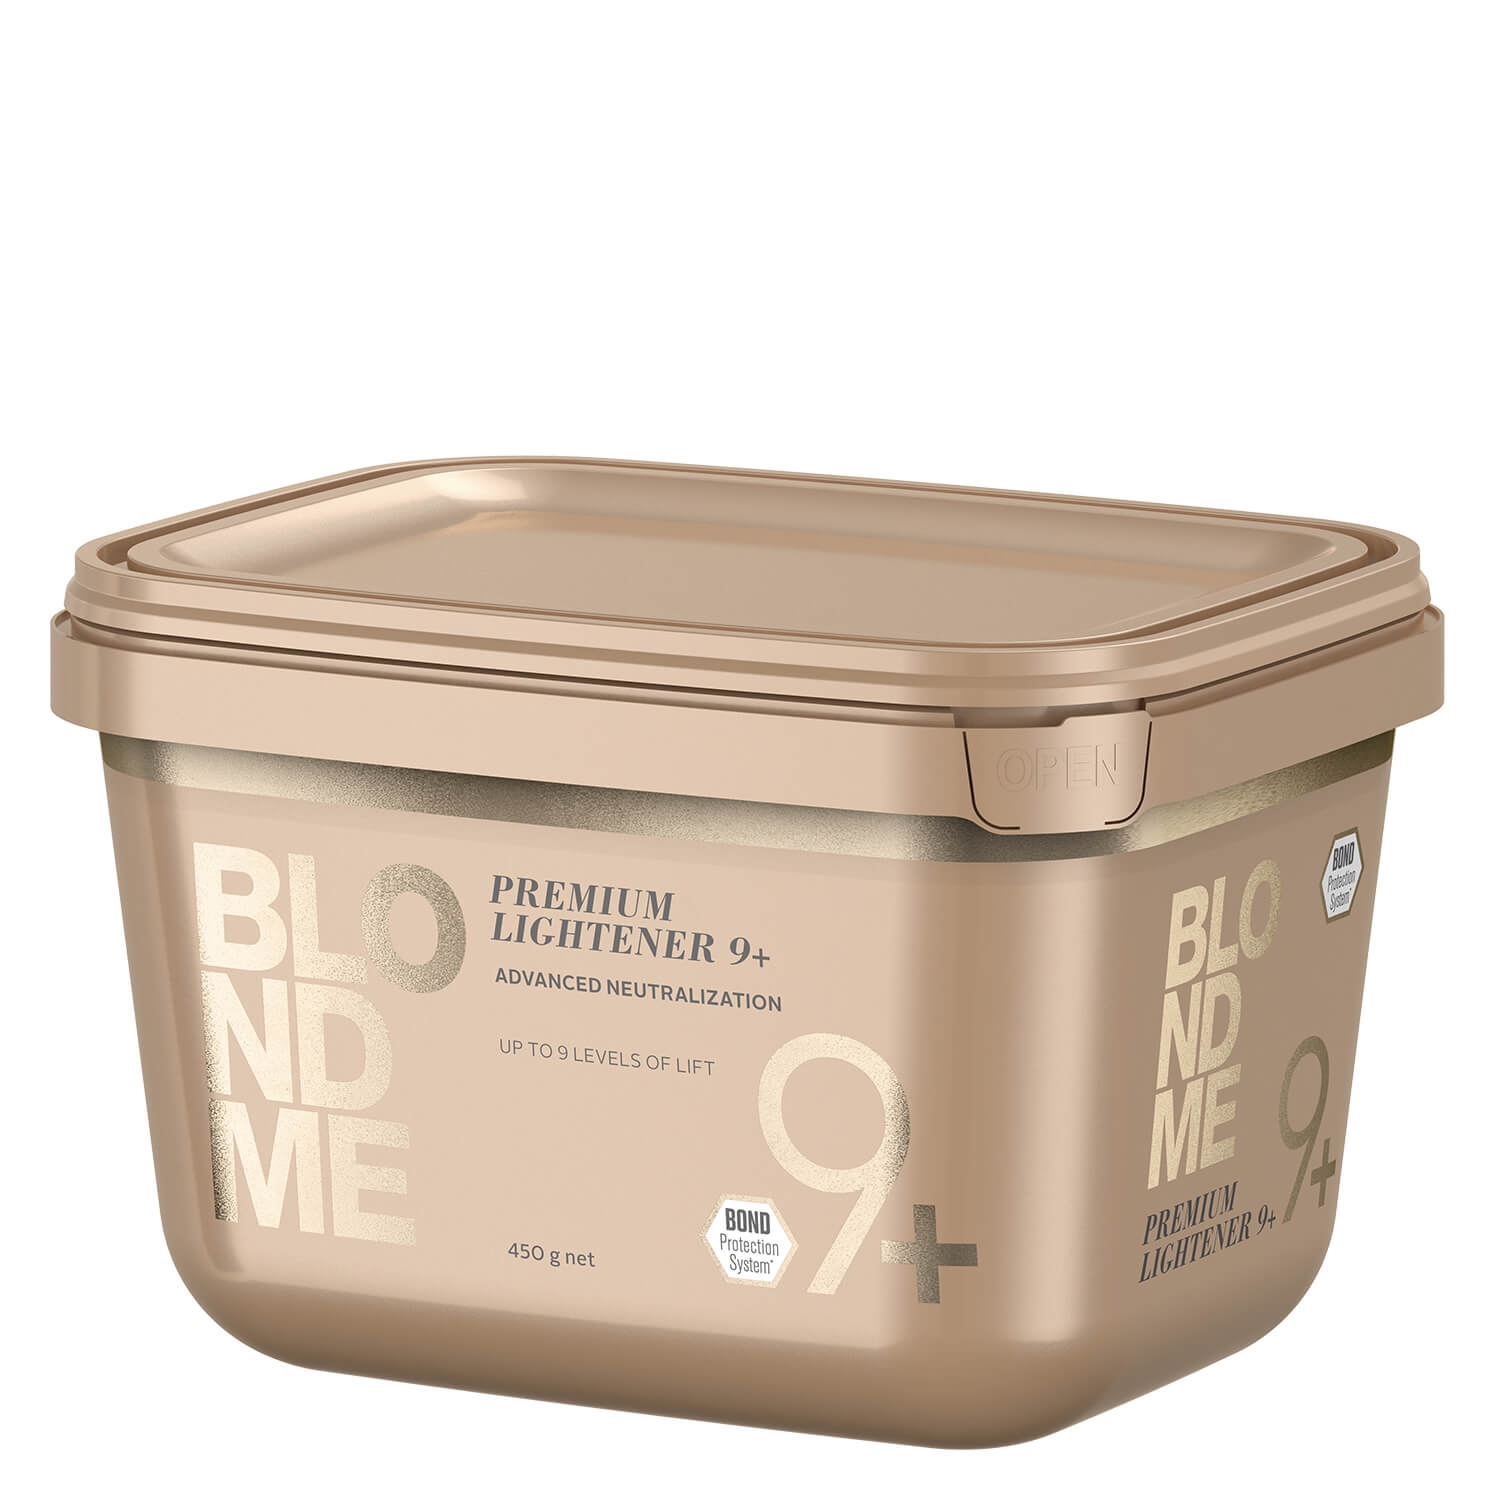 Image du produit de Blondme - Premium Lightener 9+